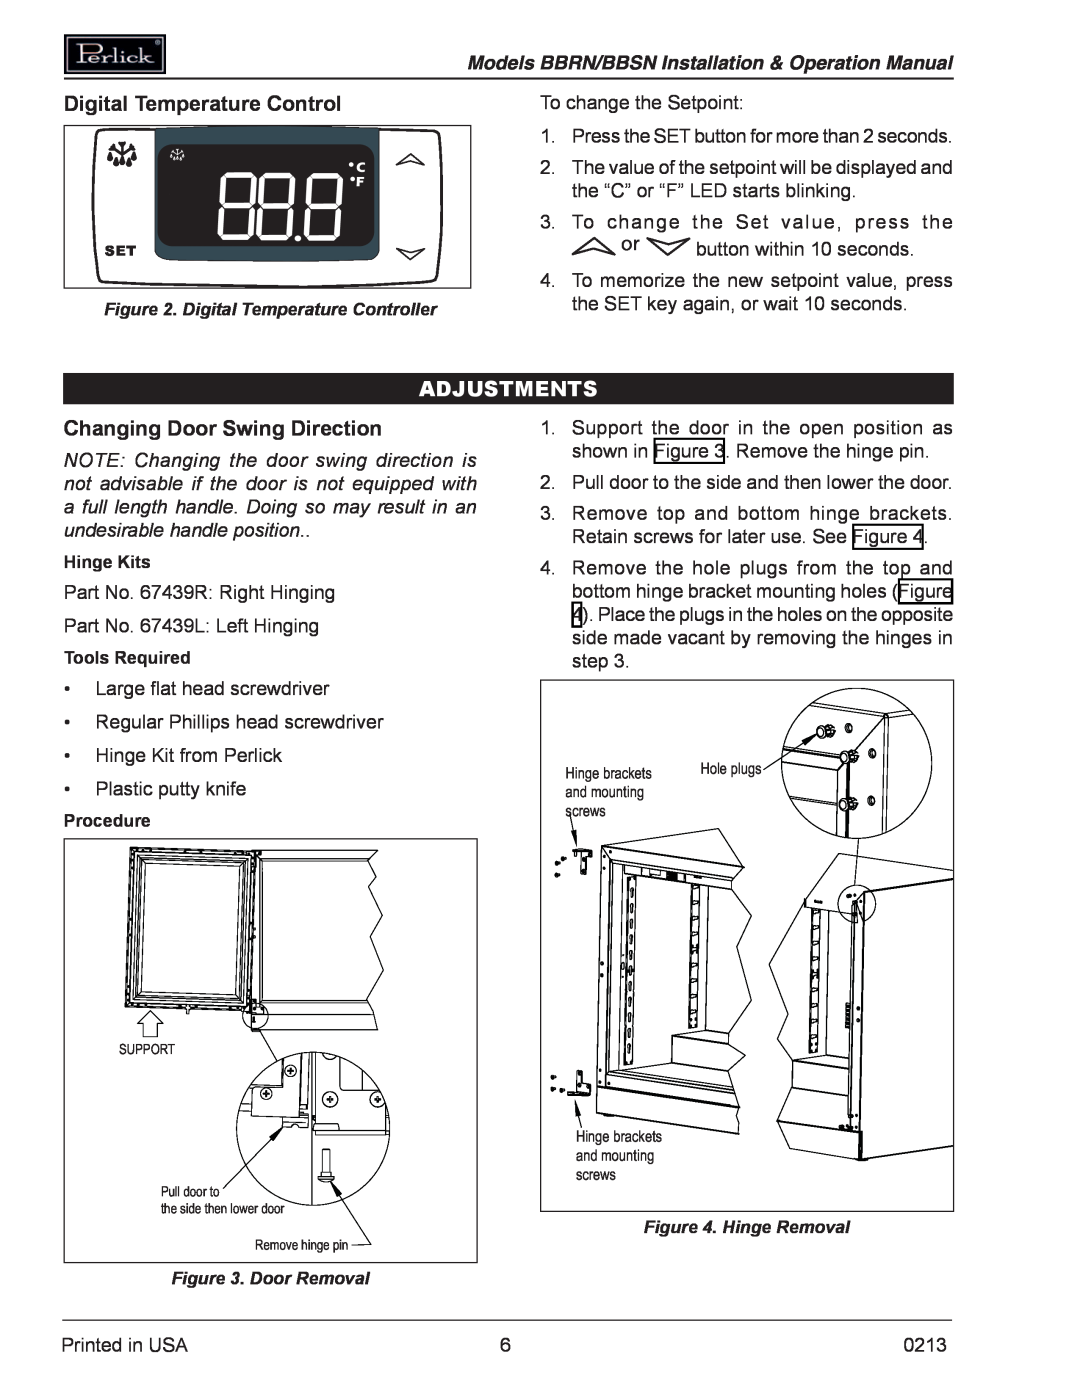 Perlick BBRN, BBSN operation manual Digital Temperature Control, Adjustments, Changing Door Swing Direction 